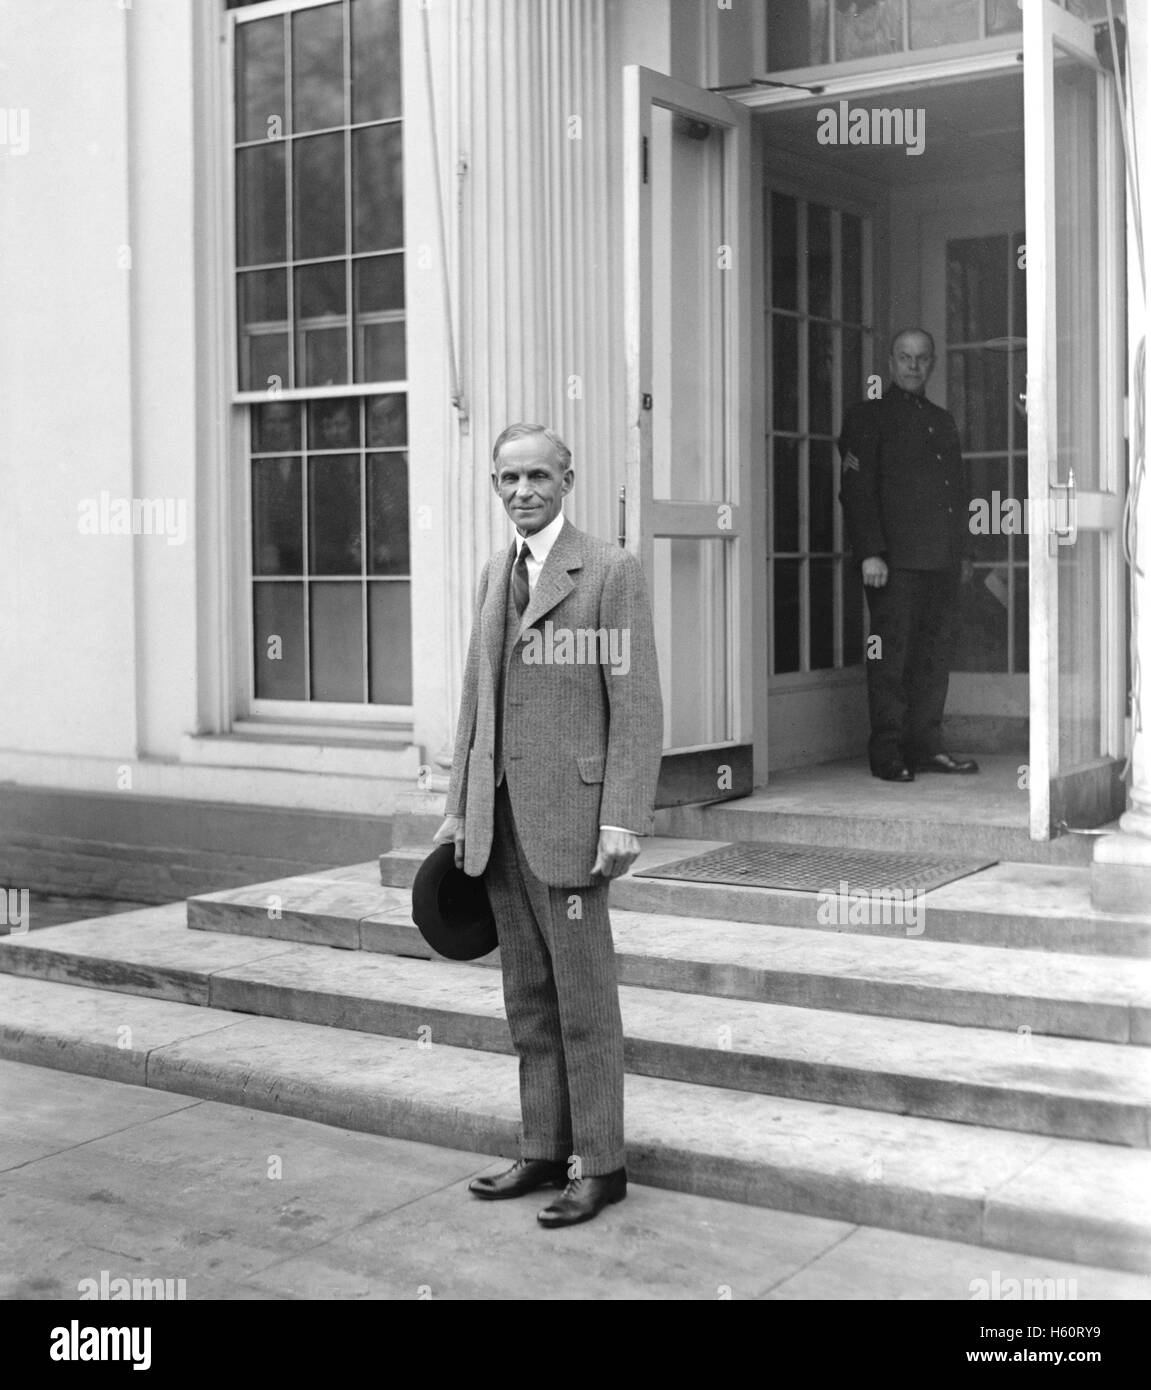 Henry Ford Leaving White House, Washington DC, USA, National Photo Company, February 1927 Stock Photo